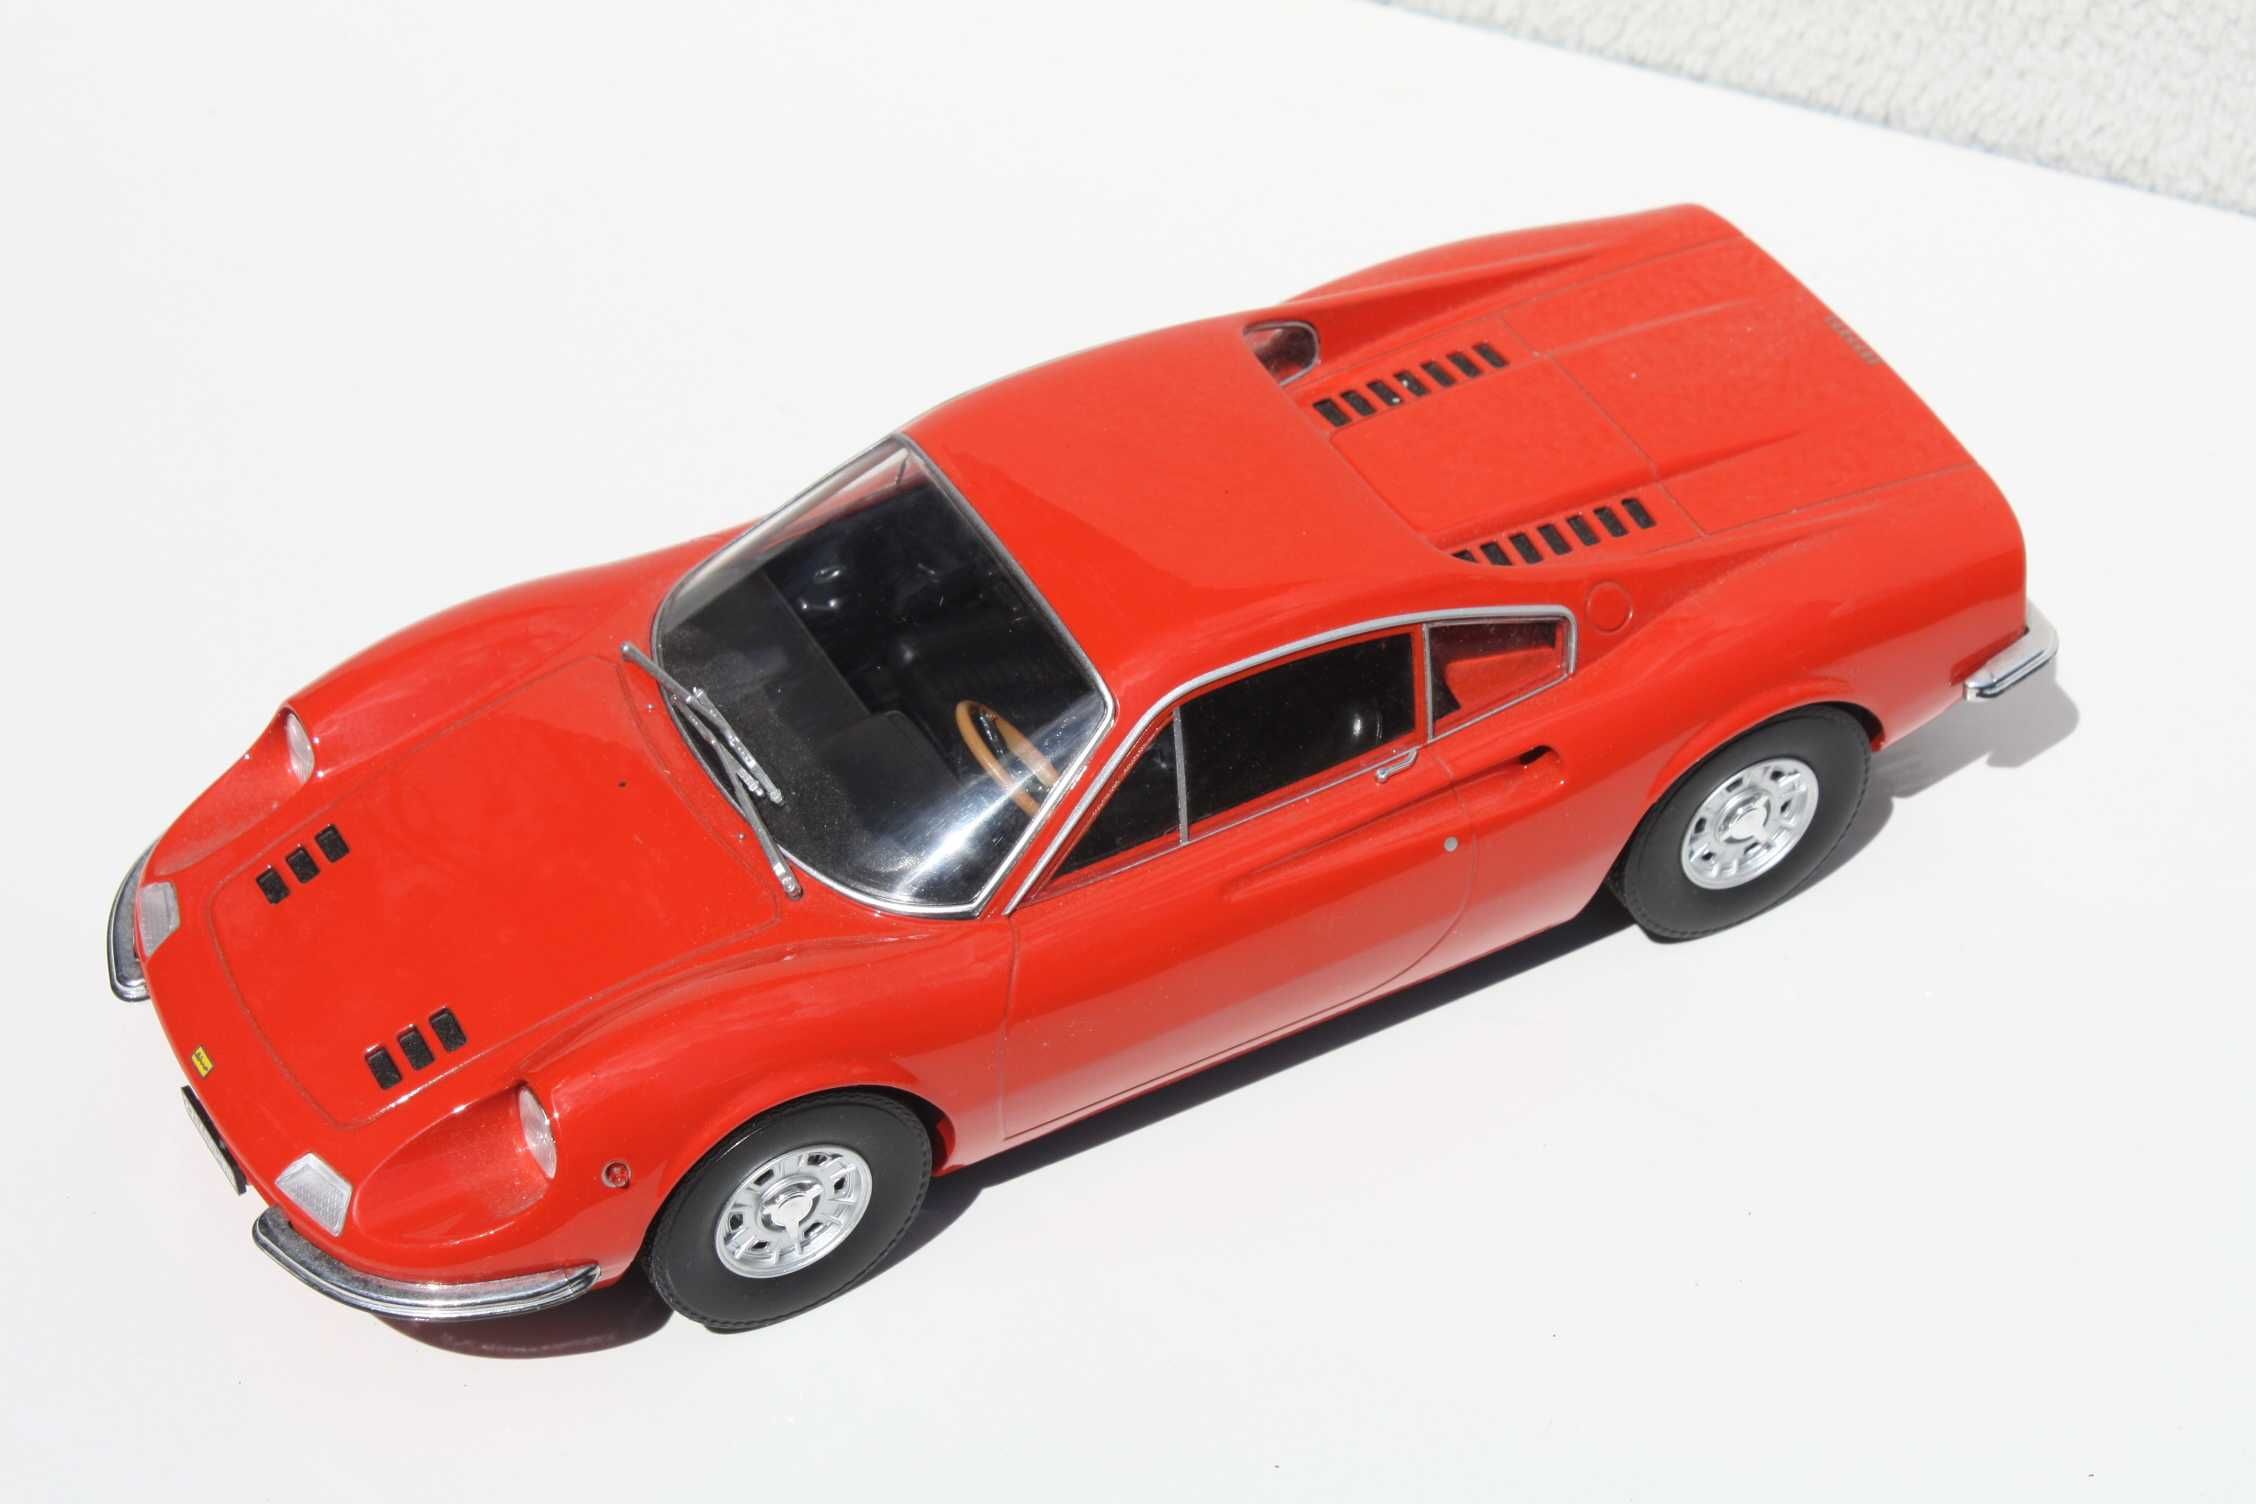 Ferrari Dino 246 Gt (1969) 1:18